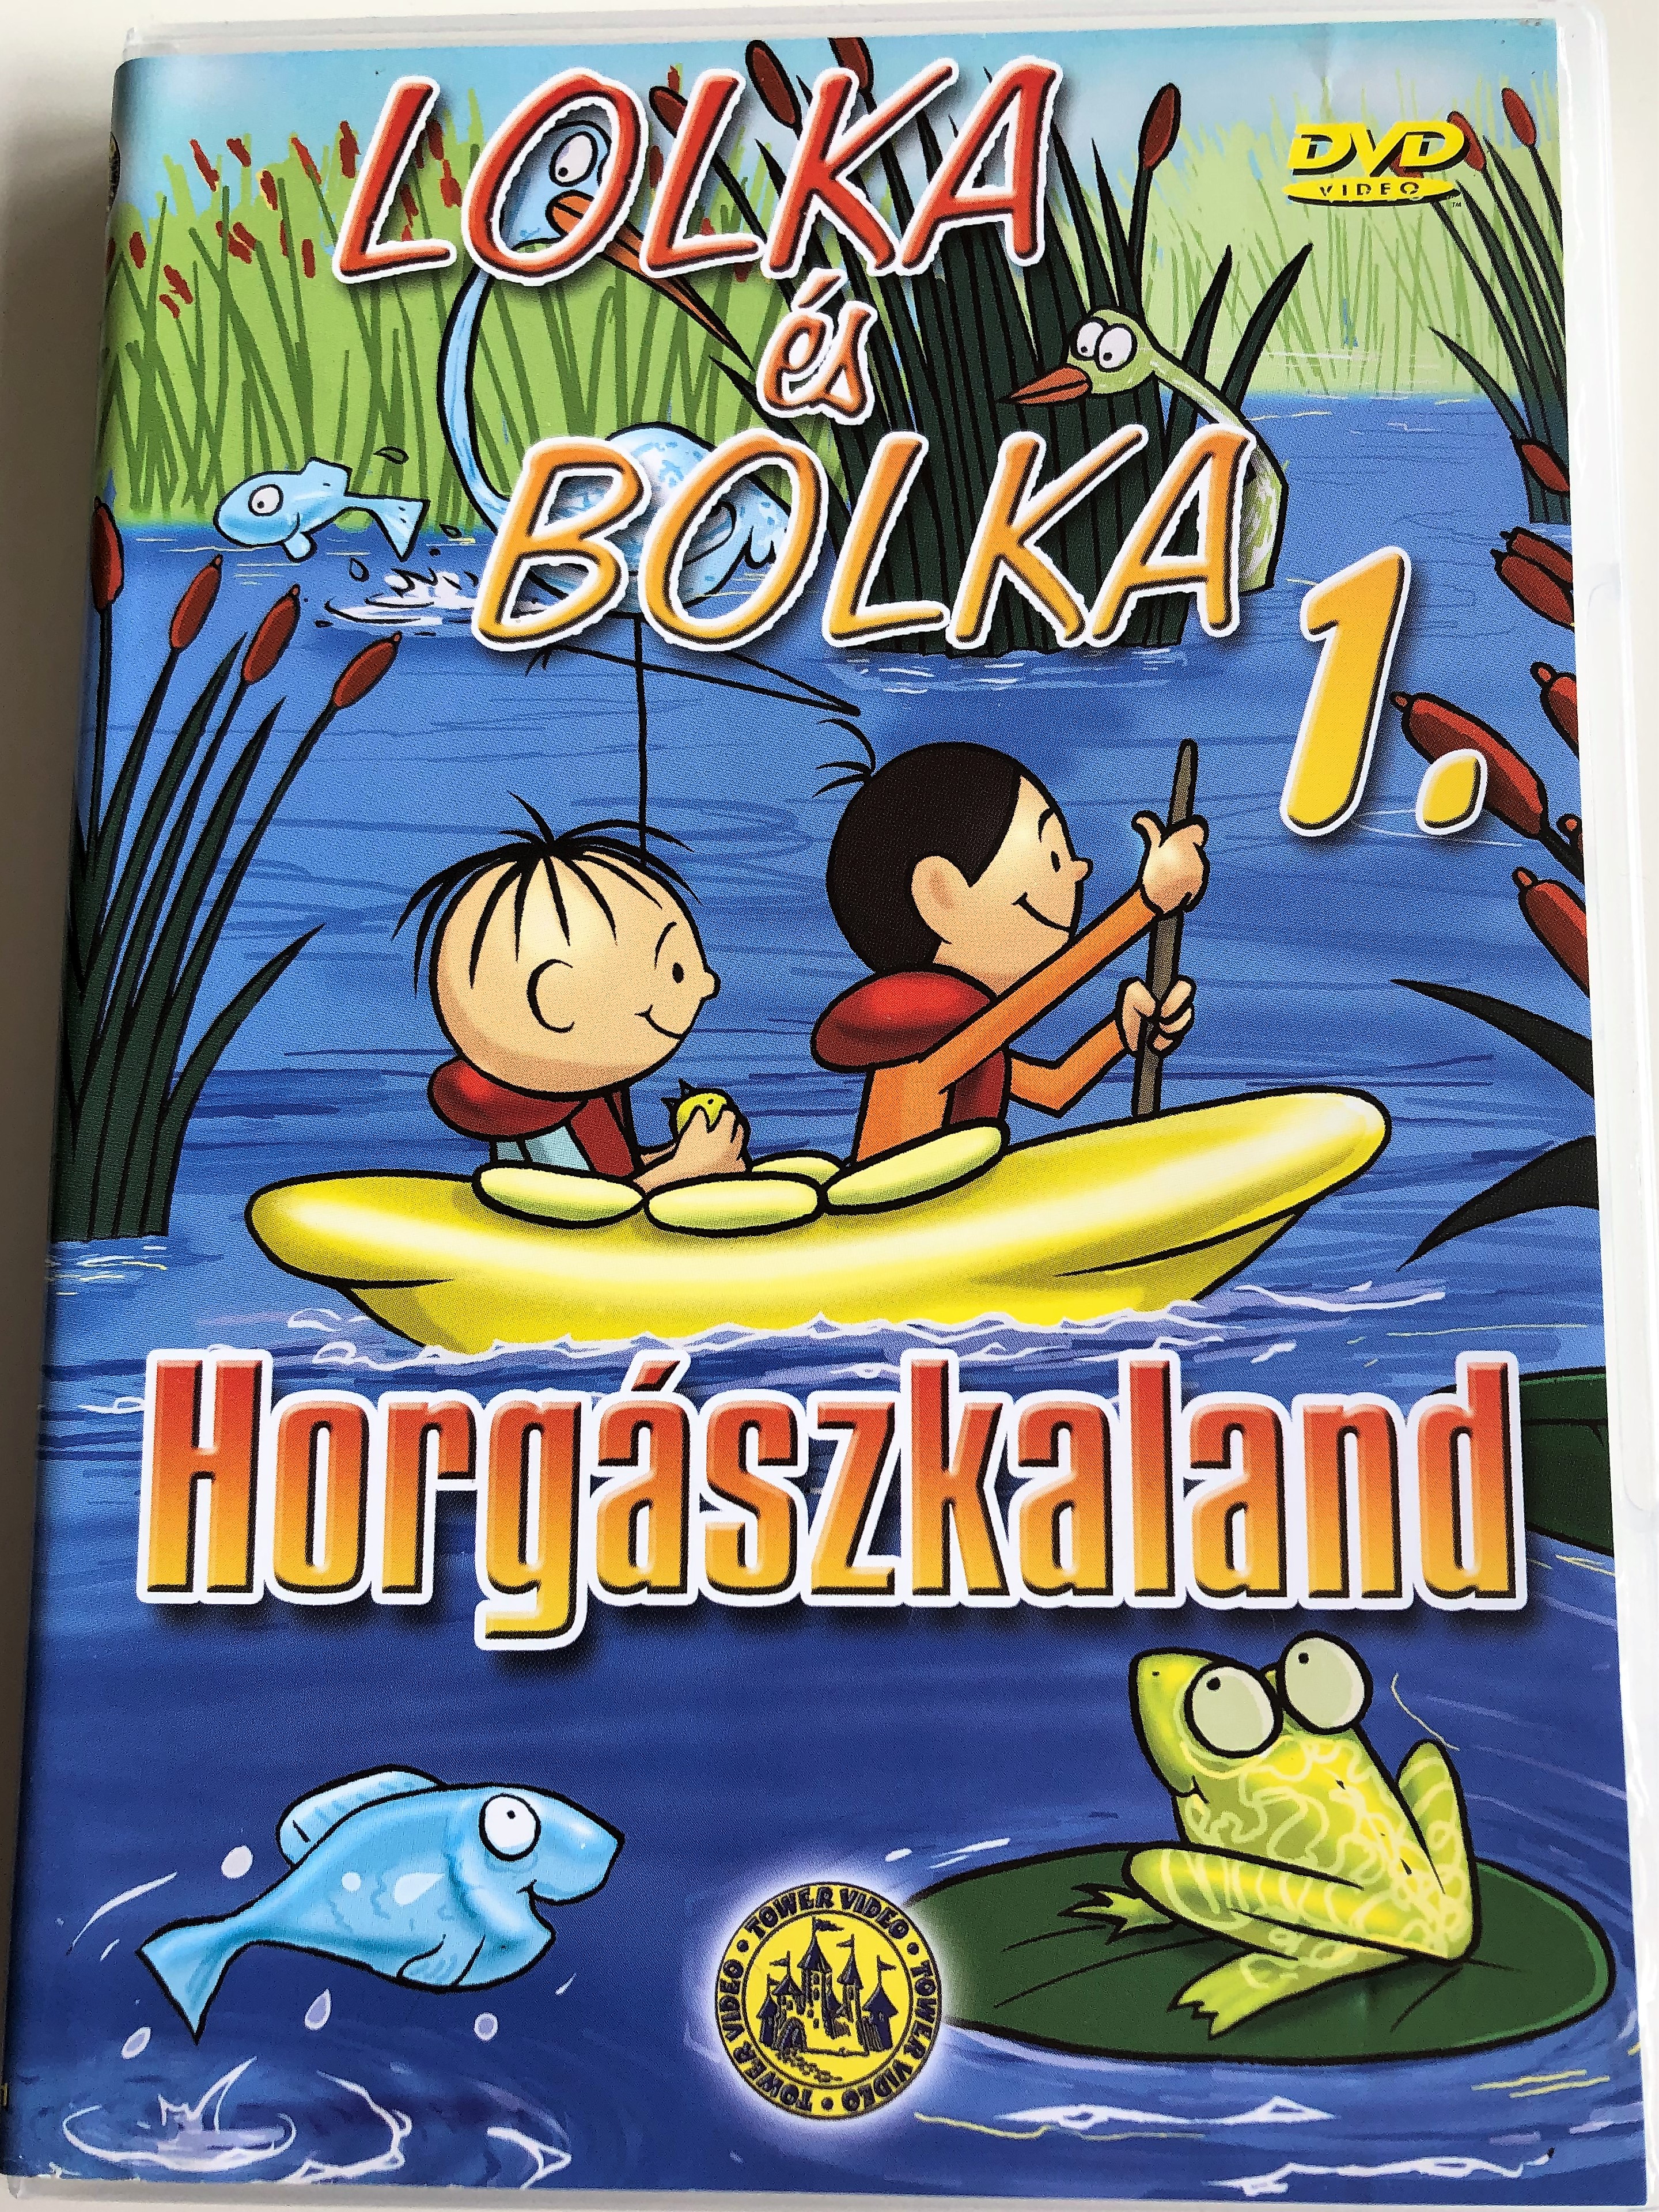 lolka-s-bolka-1.-horg-szkaland-dvd-bolek-i-lolek-1.-yeti-created-by-wladyslaw-nehrebecki-classic-polish-cartoon-1-.jpg